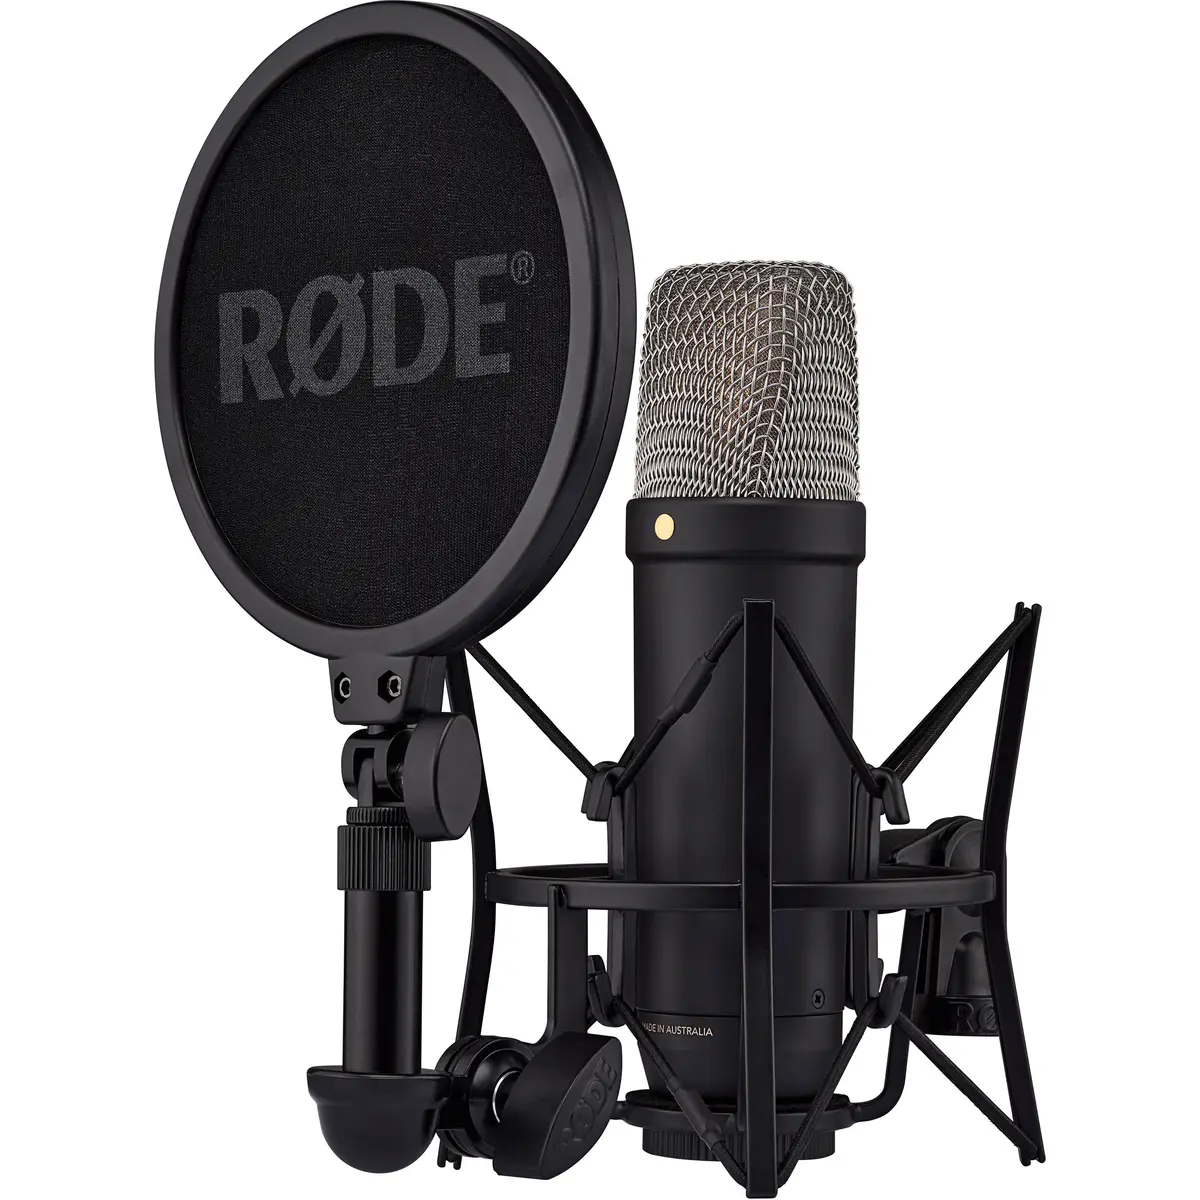 Main Image Rode NT1 5th Generation Hybrid Microphone (Black)